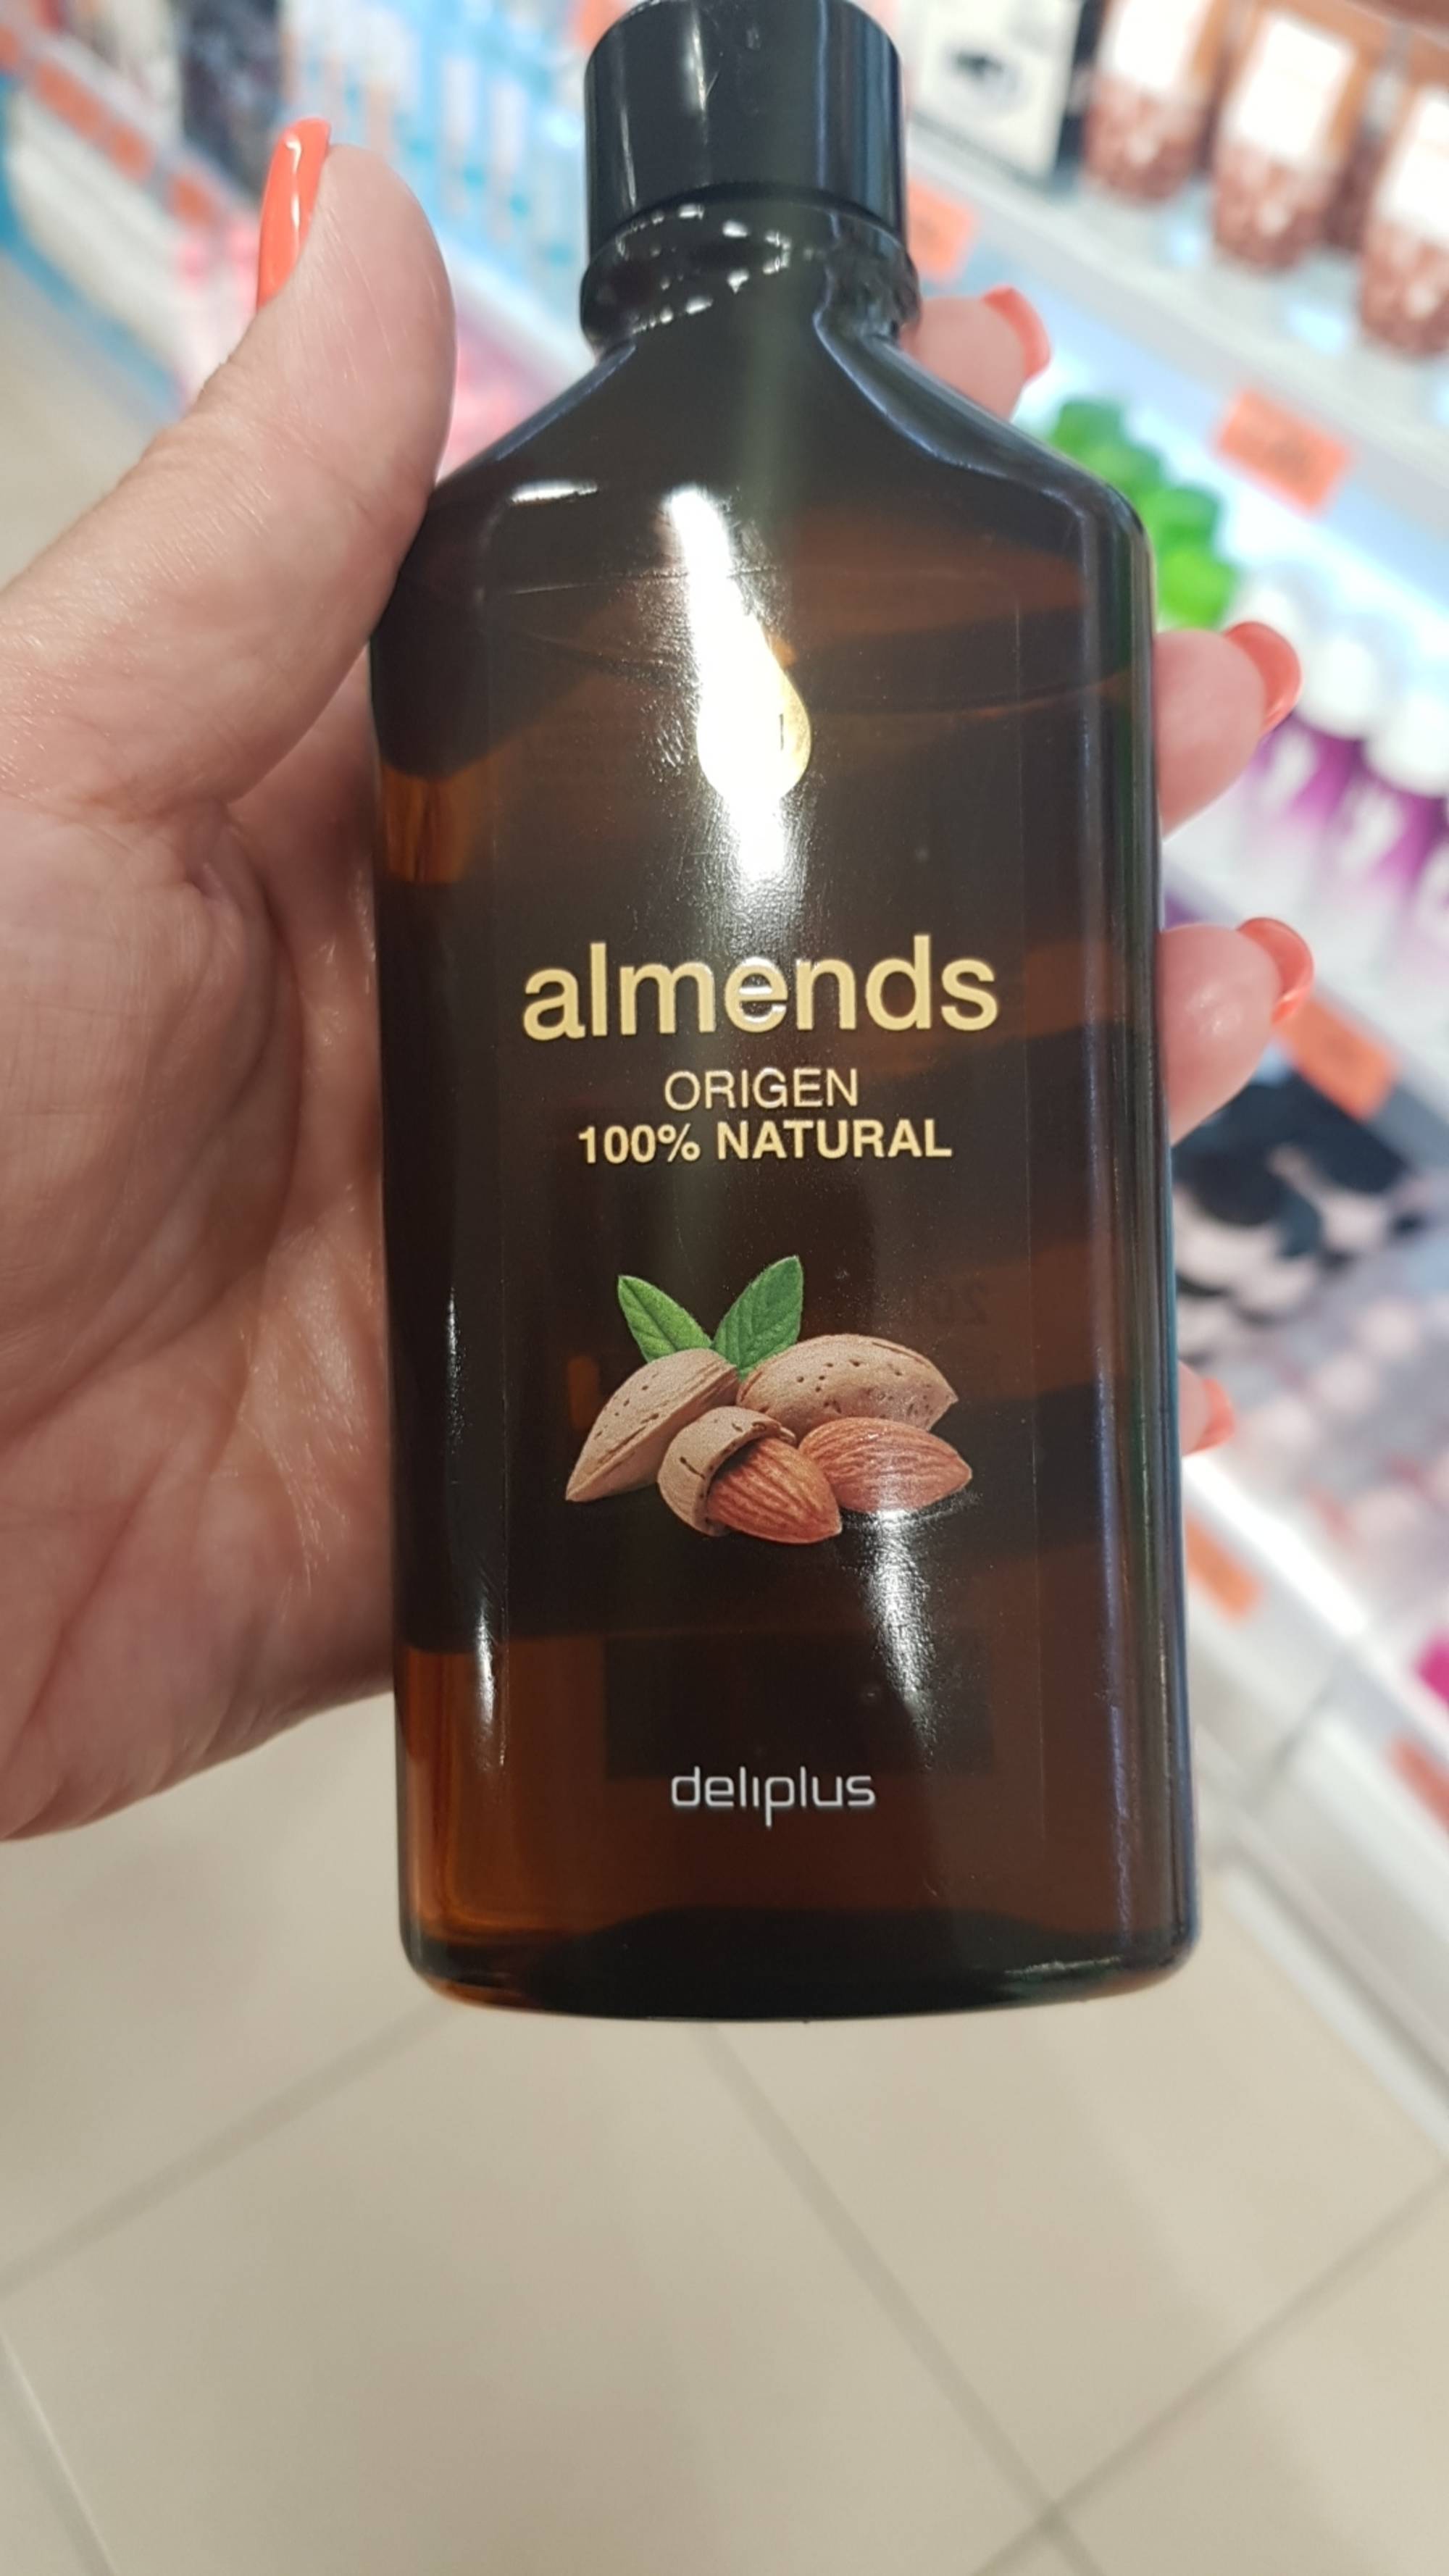 DELIPLUS - Almends origen 100% natural